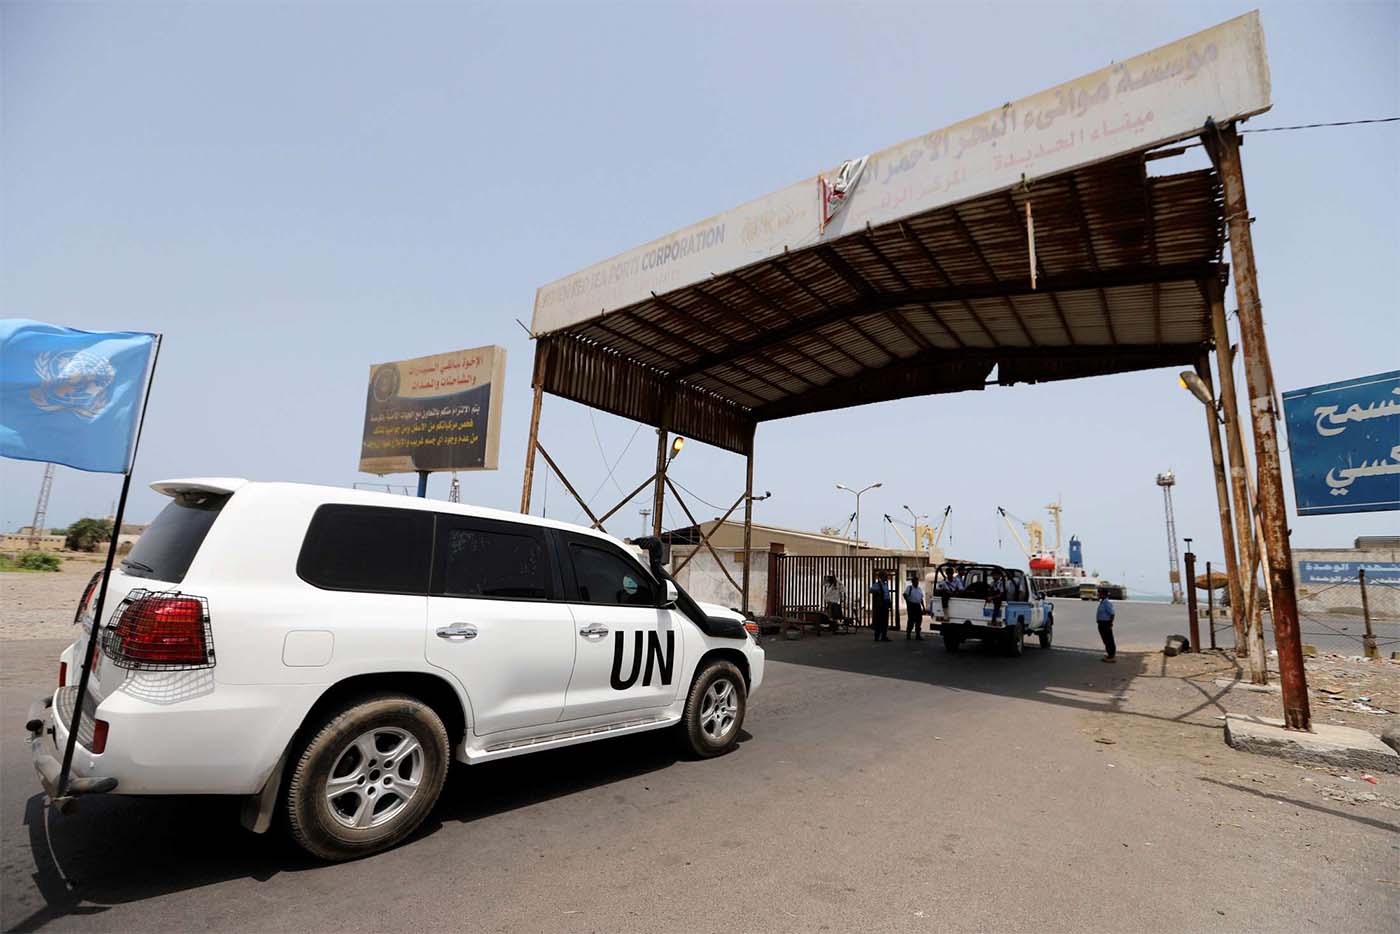 A UN vehicle is seen at Hodeidah port in Hodeidah